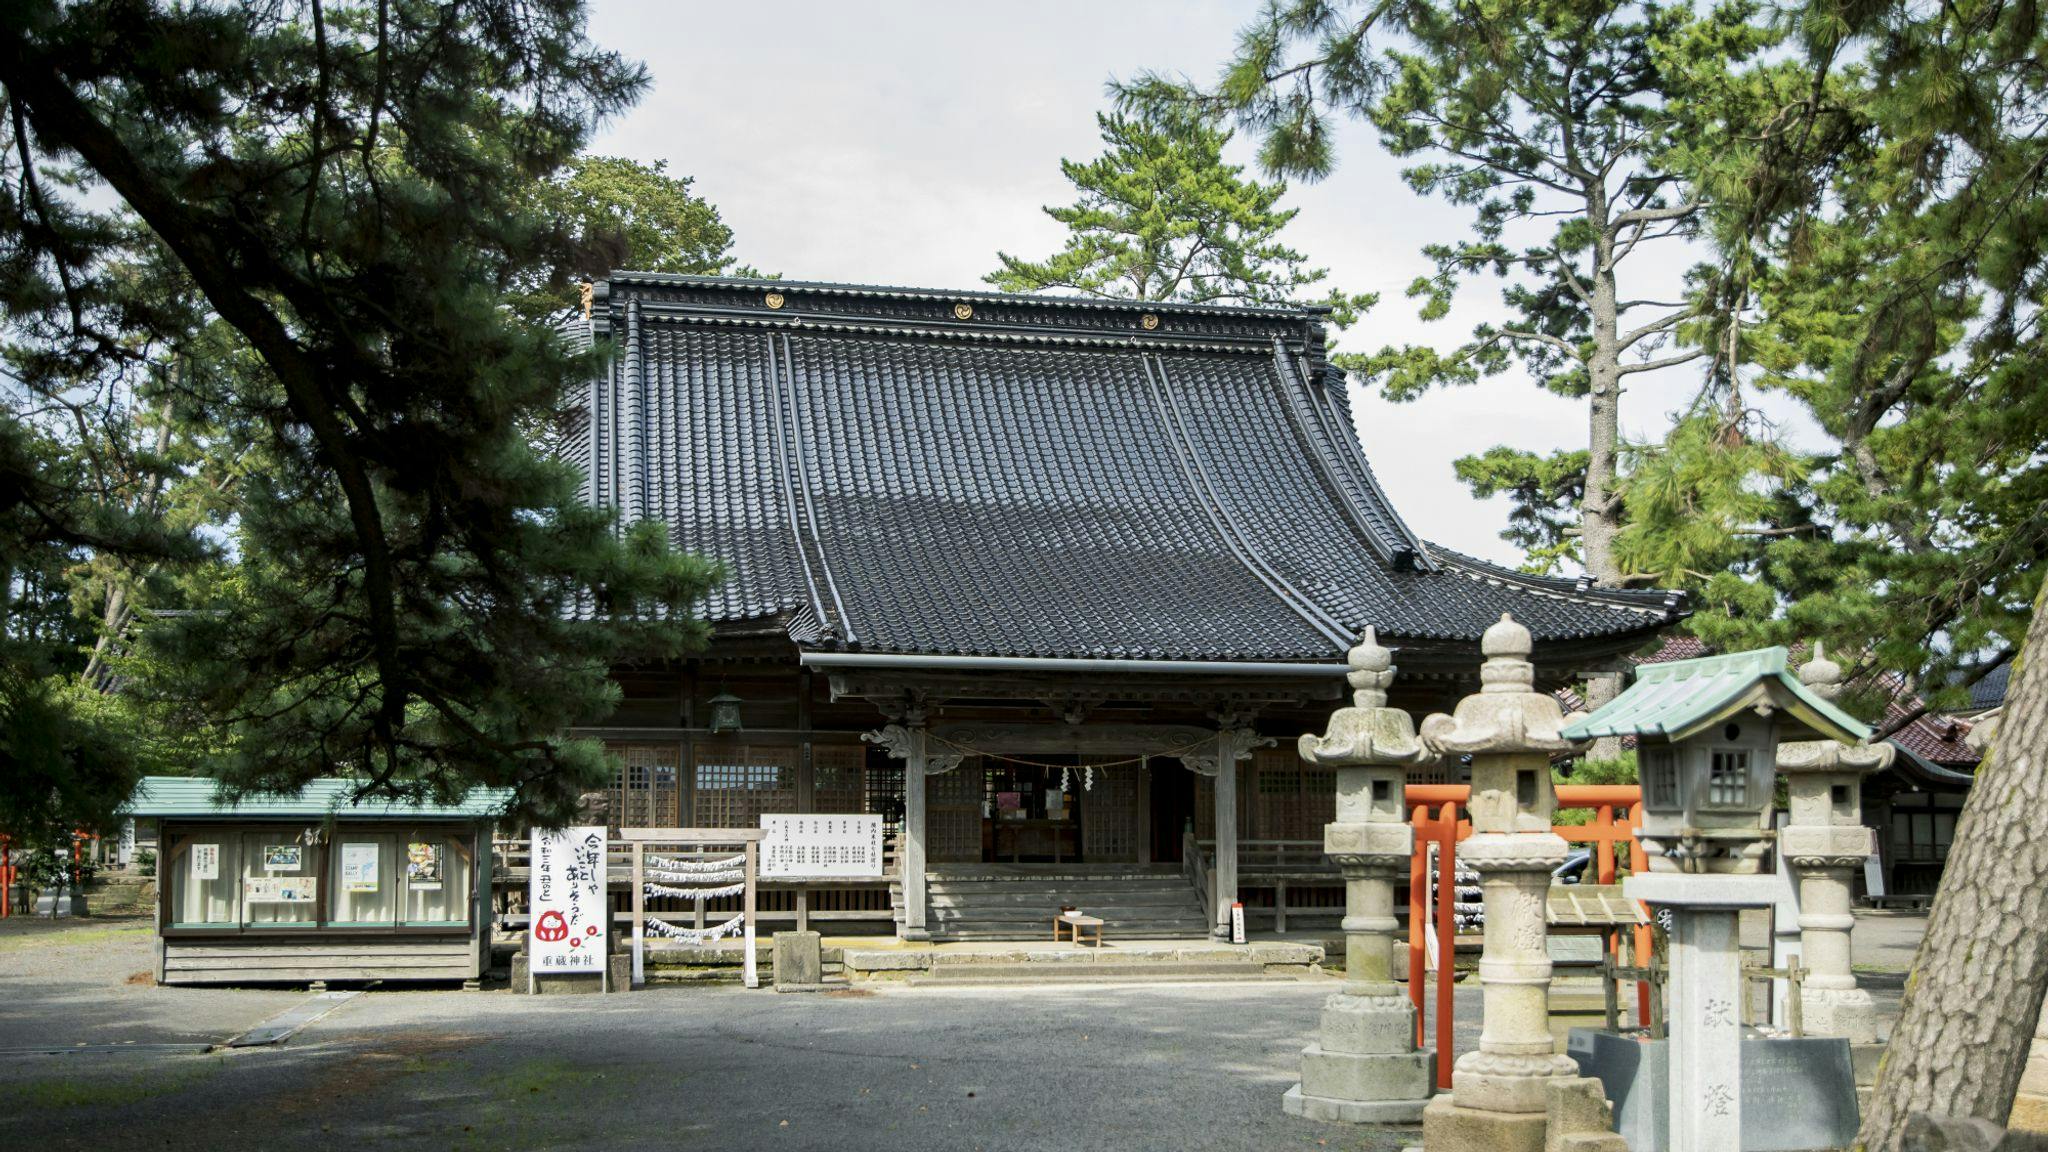 The Juzo Shrine